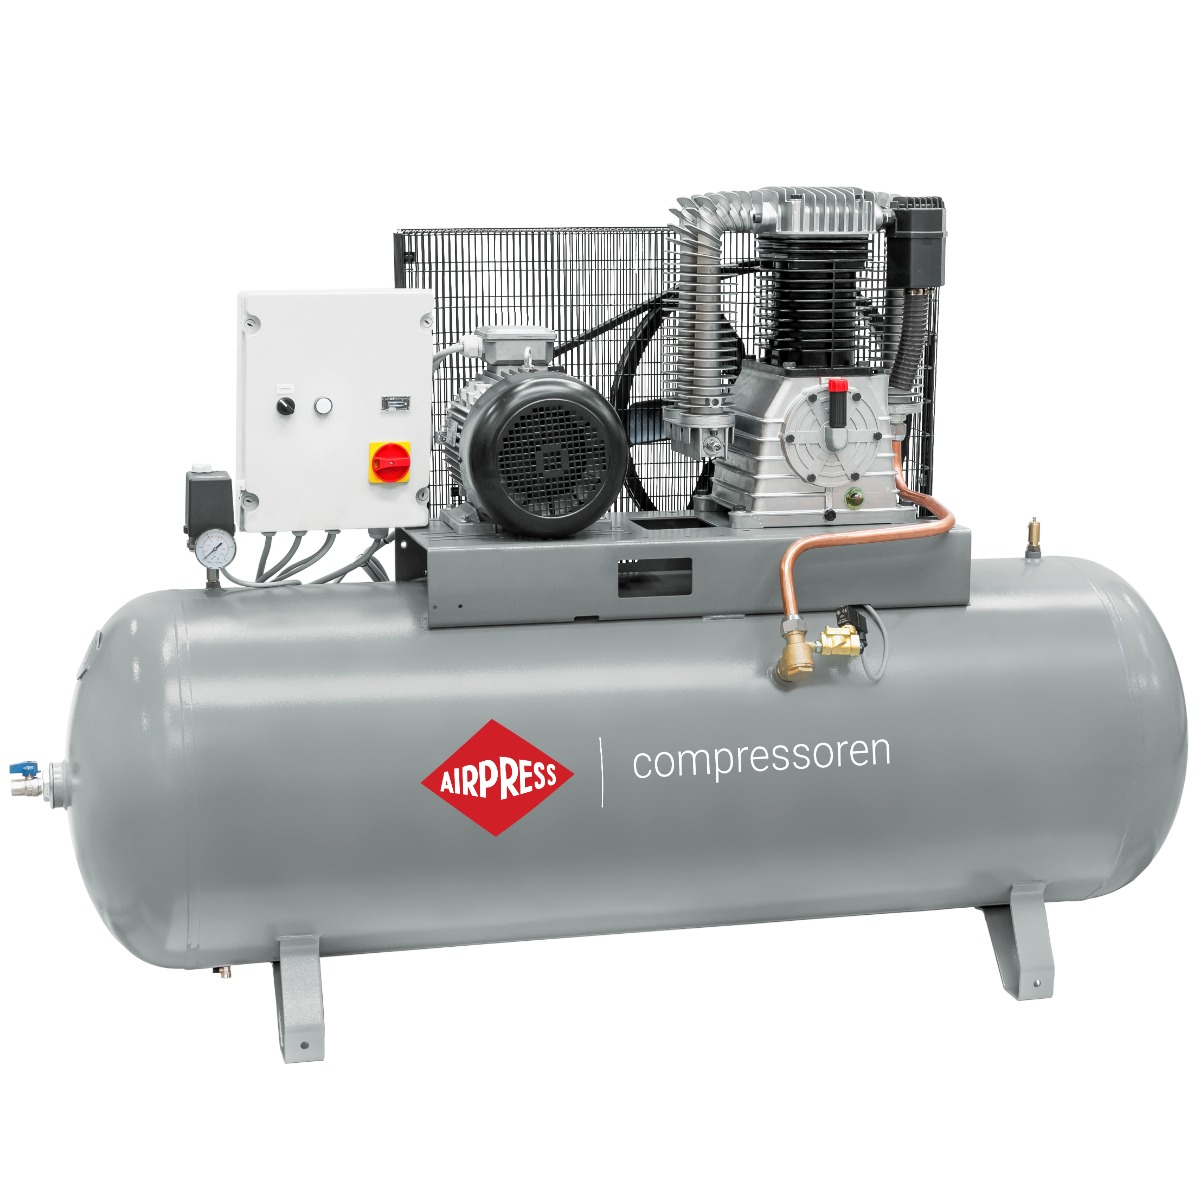 HK 2000-500 SD Pro compressor